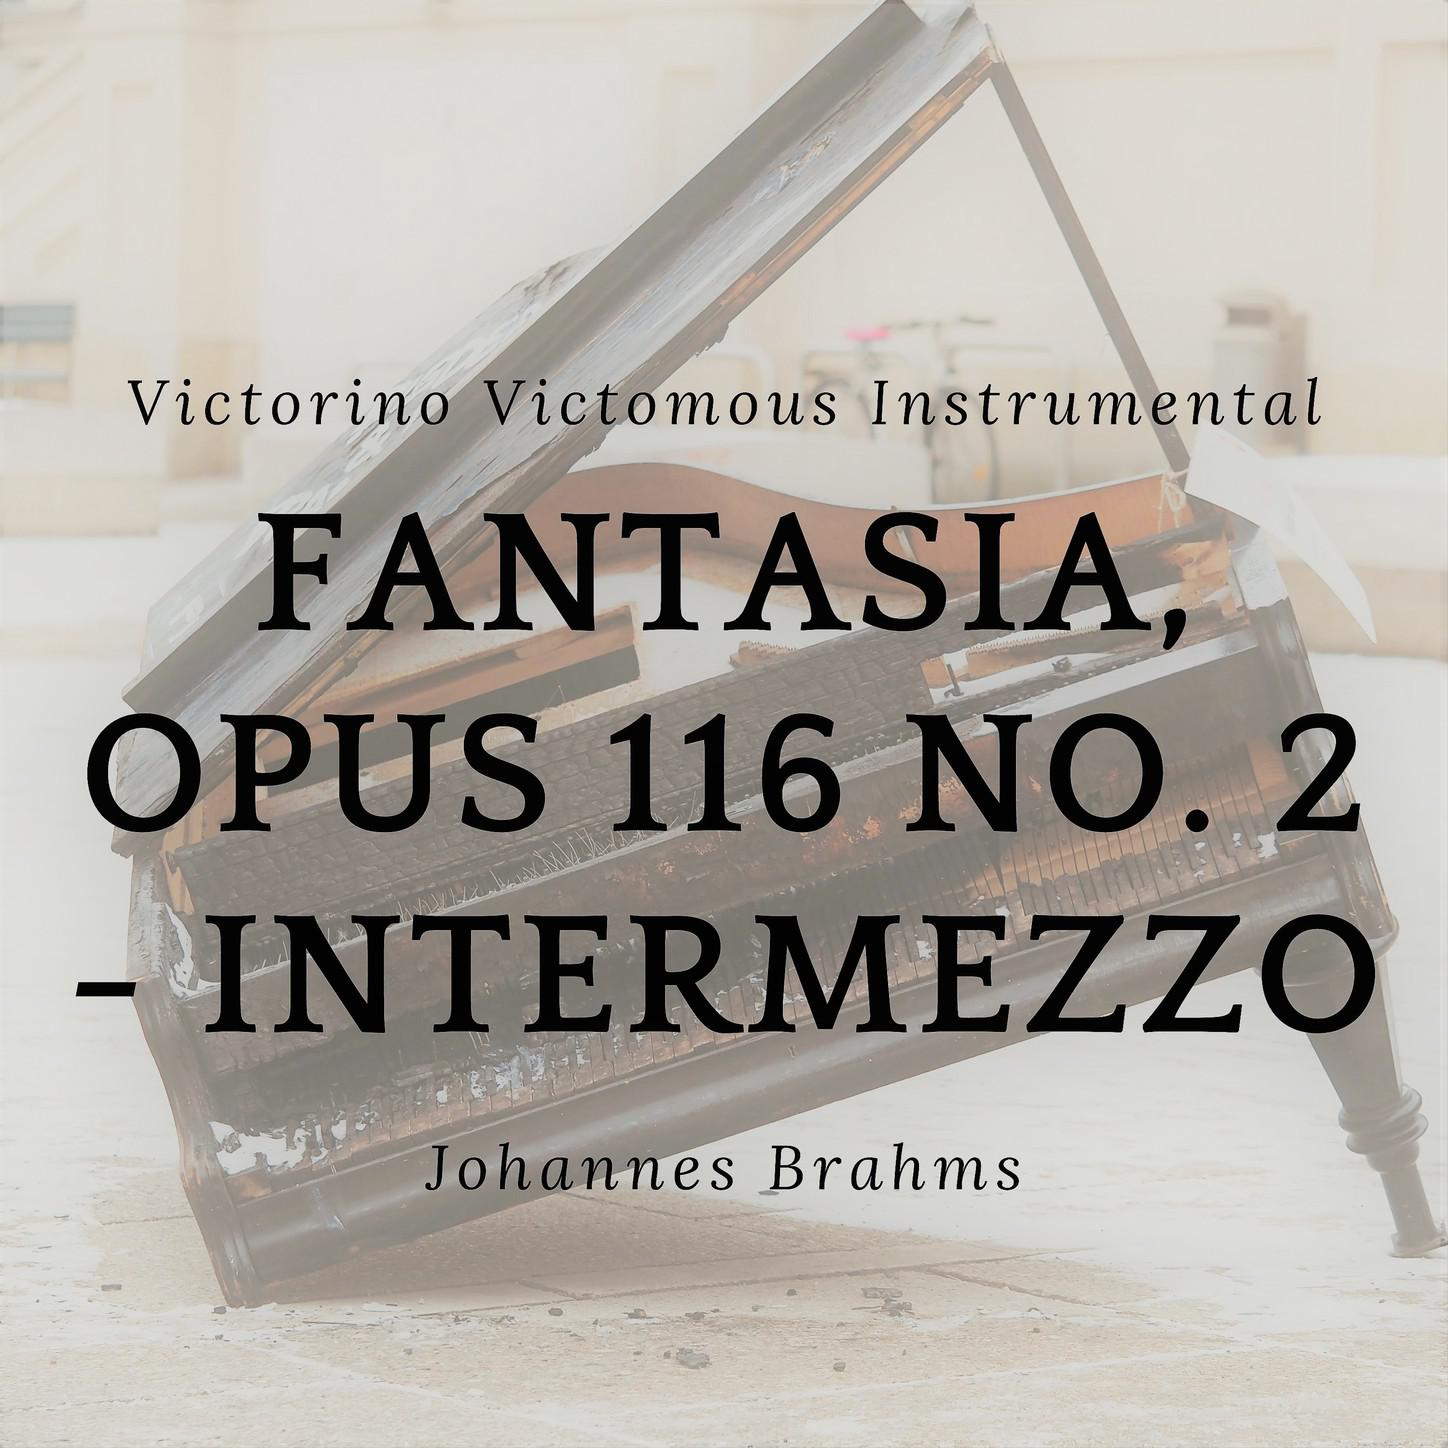 Fantasia, Opus 116 No. 2 - Intermezzo